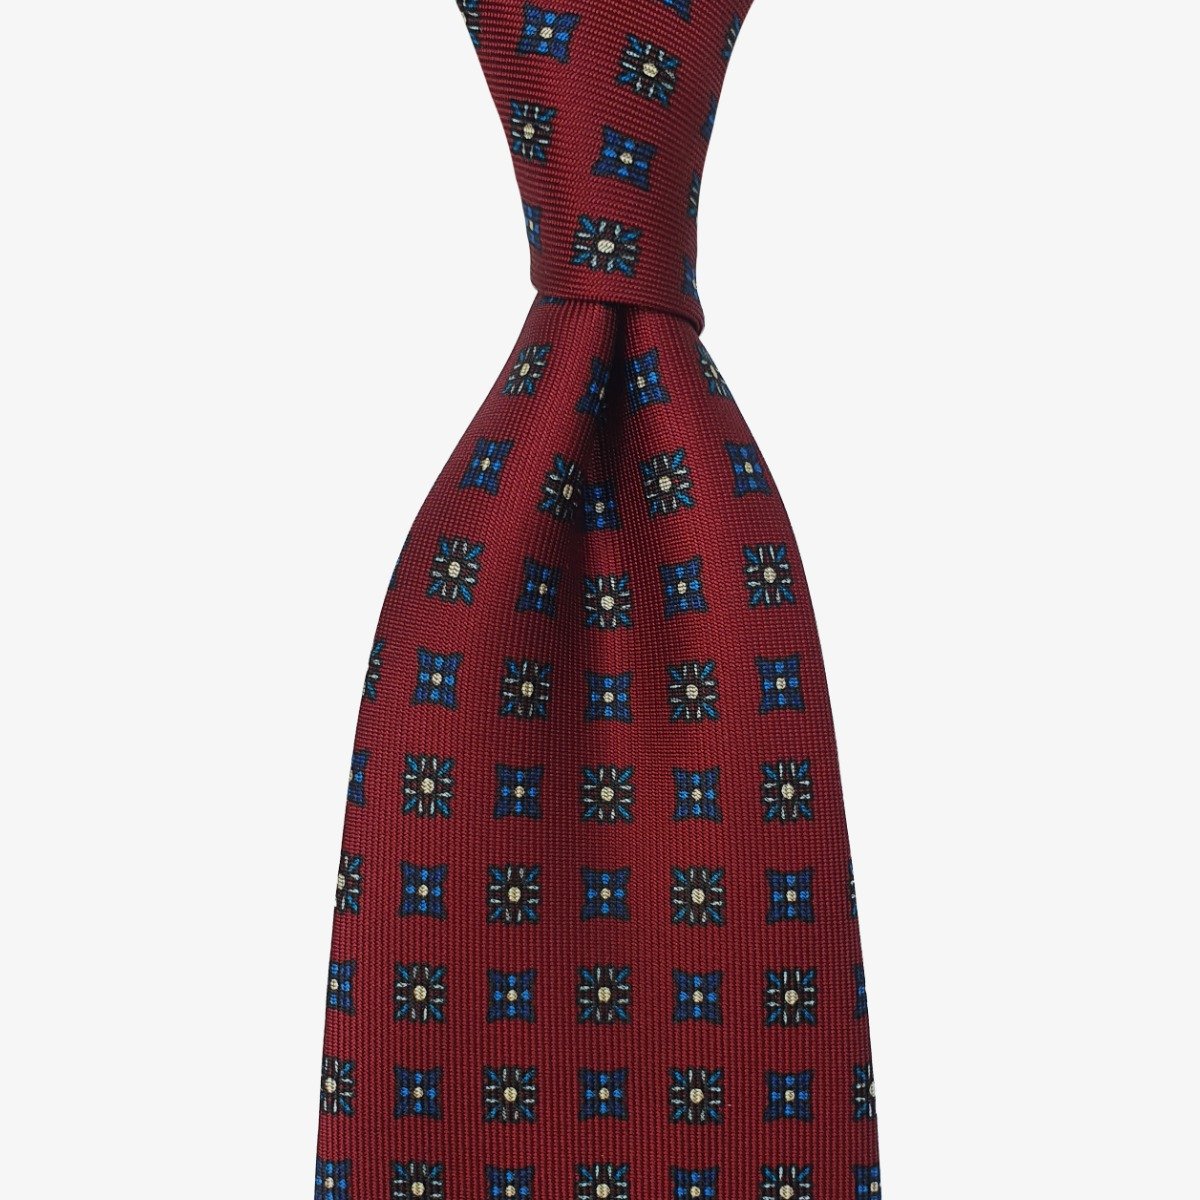 Shibumi Firenze wine silk tie with blue floral pattern